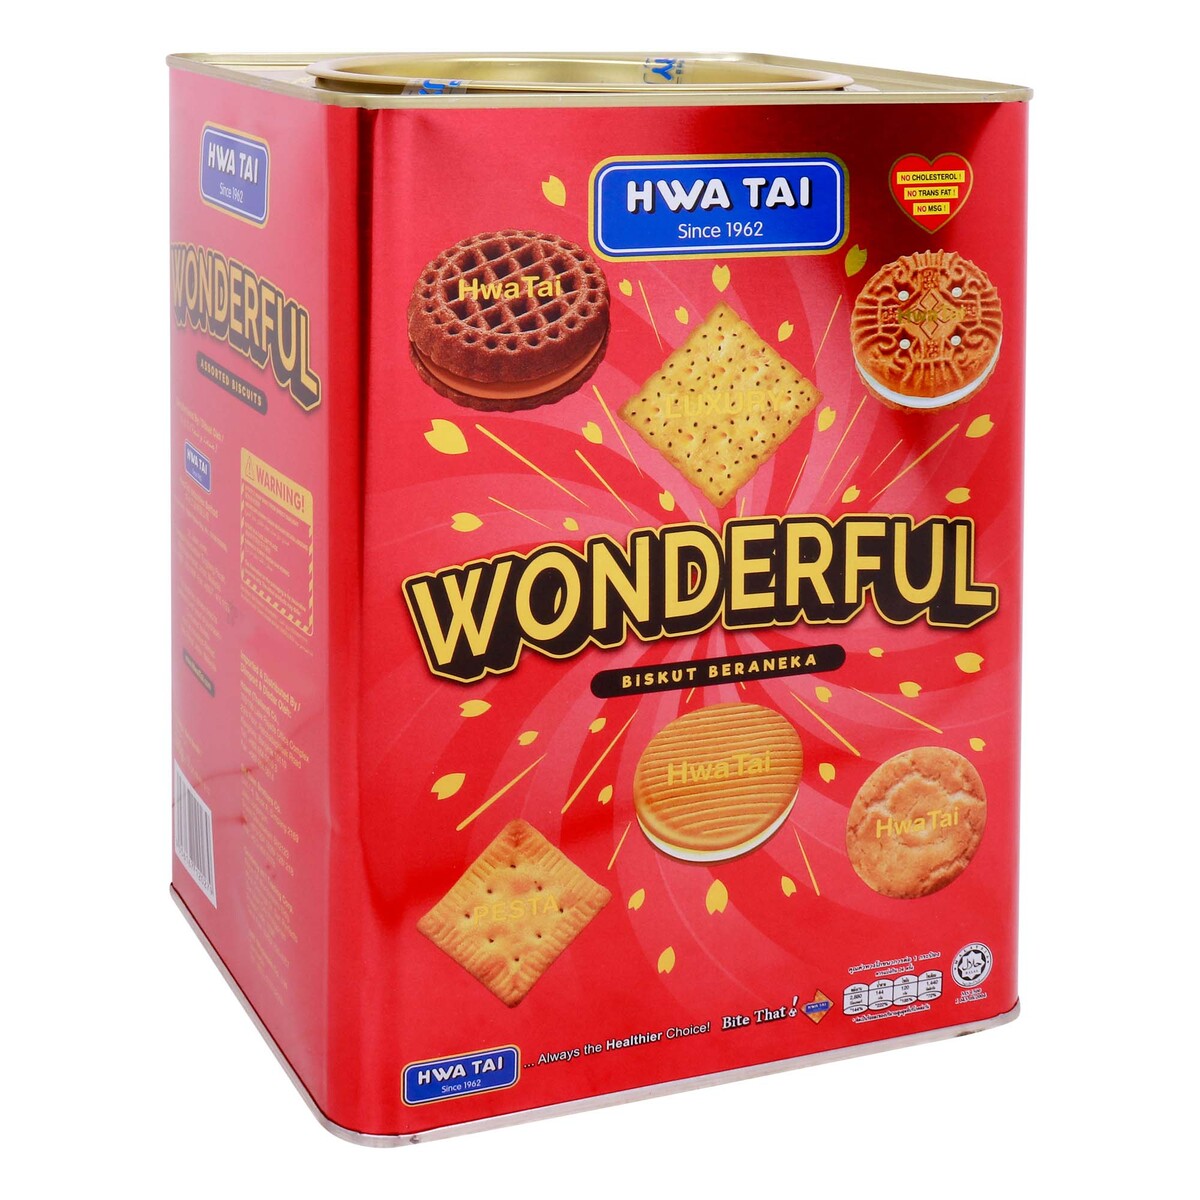 Hwa Tai Wonderful Assorted Biscuits 600 g